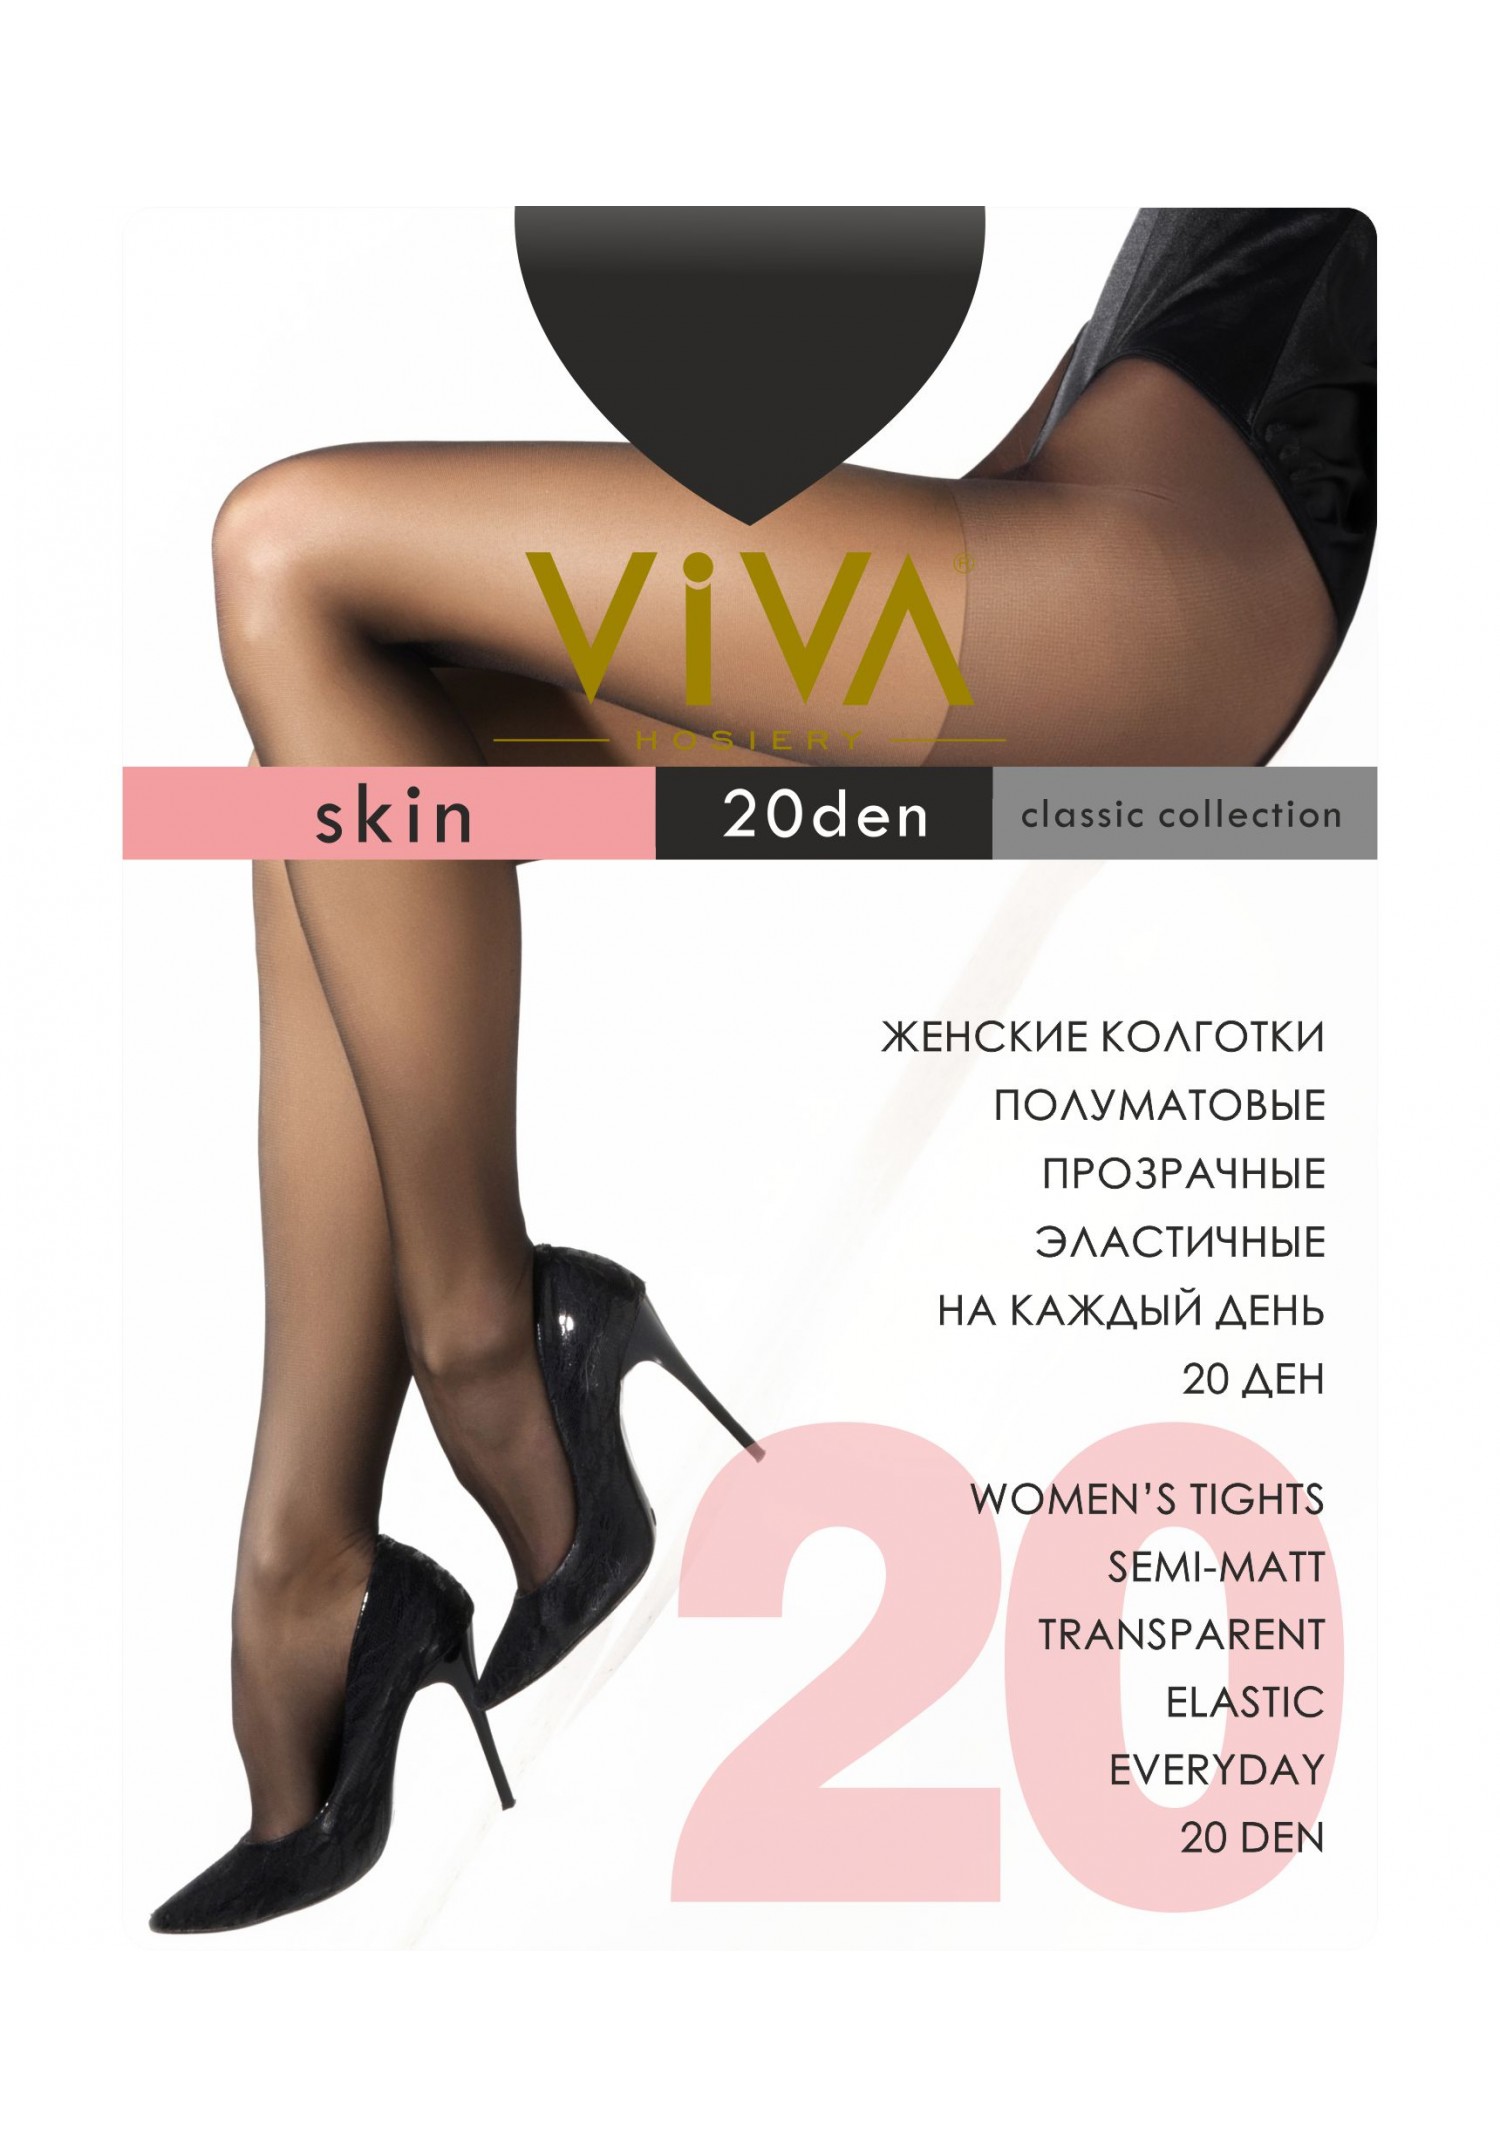 Viva Skin 20 Den Կանացի դասական զուգագուլպա